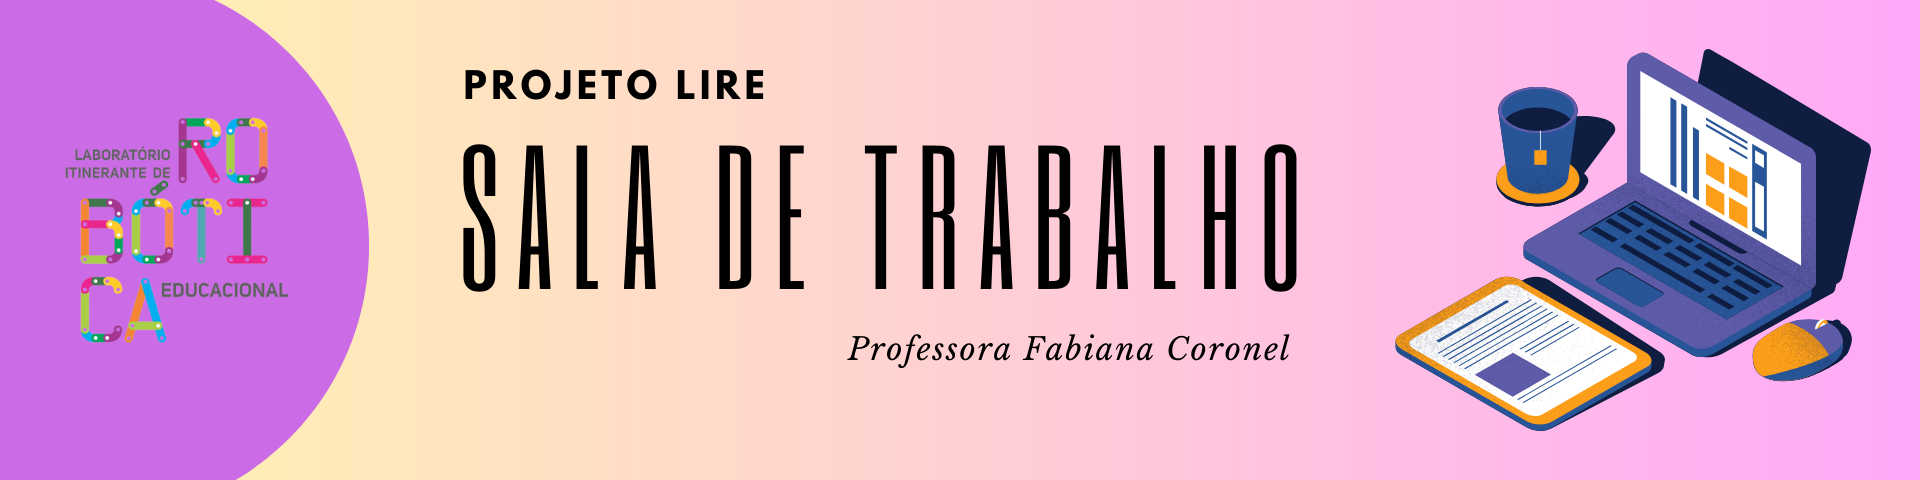 SALA DE TRABALHO DA PROFA. FABIANA CORONEL